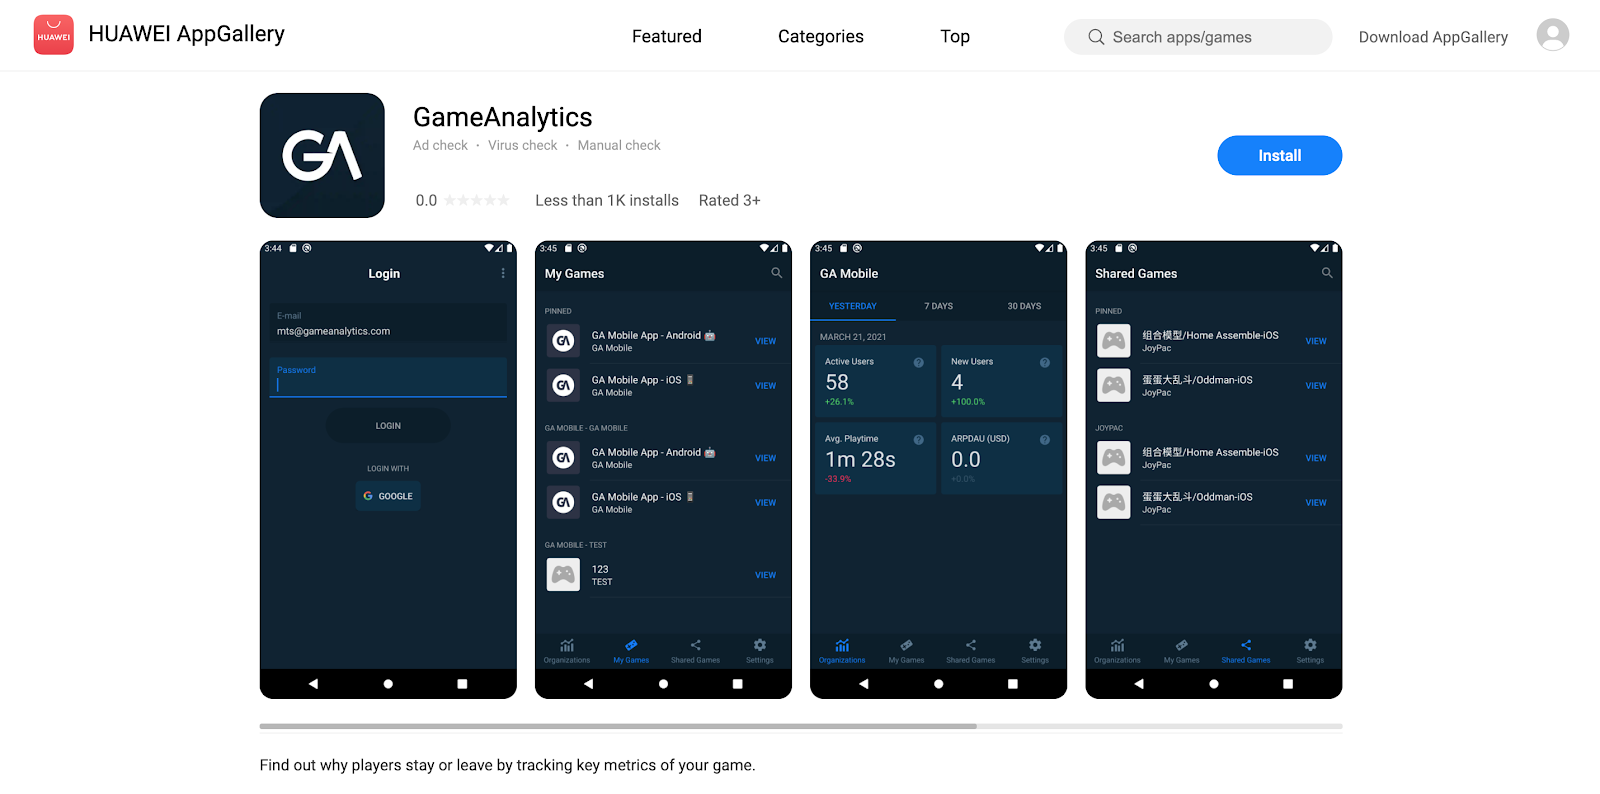 GameAnalytics App on AppGallery 